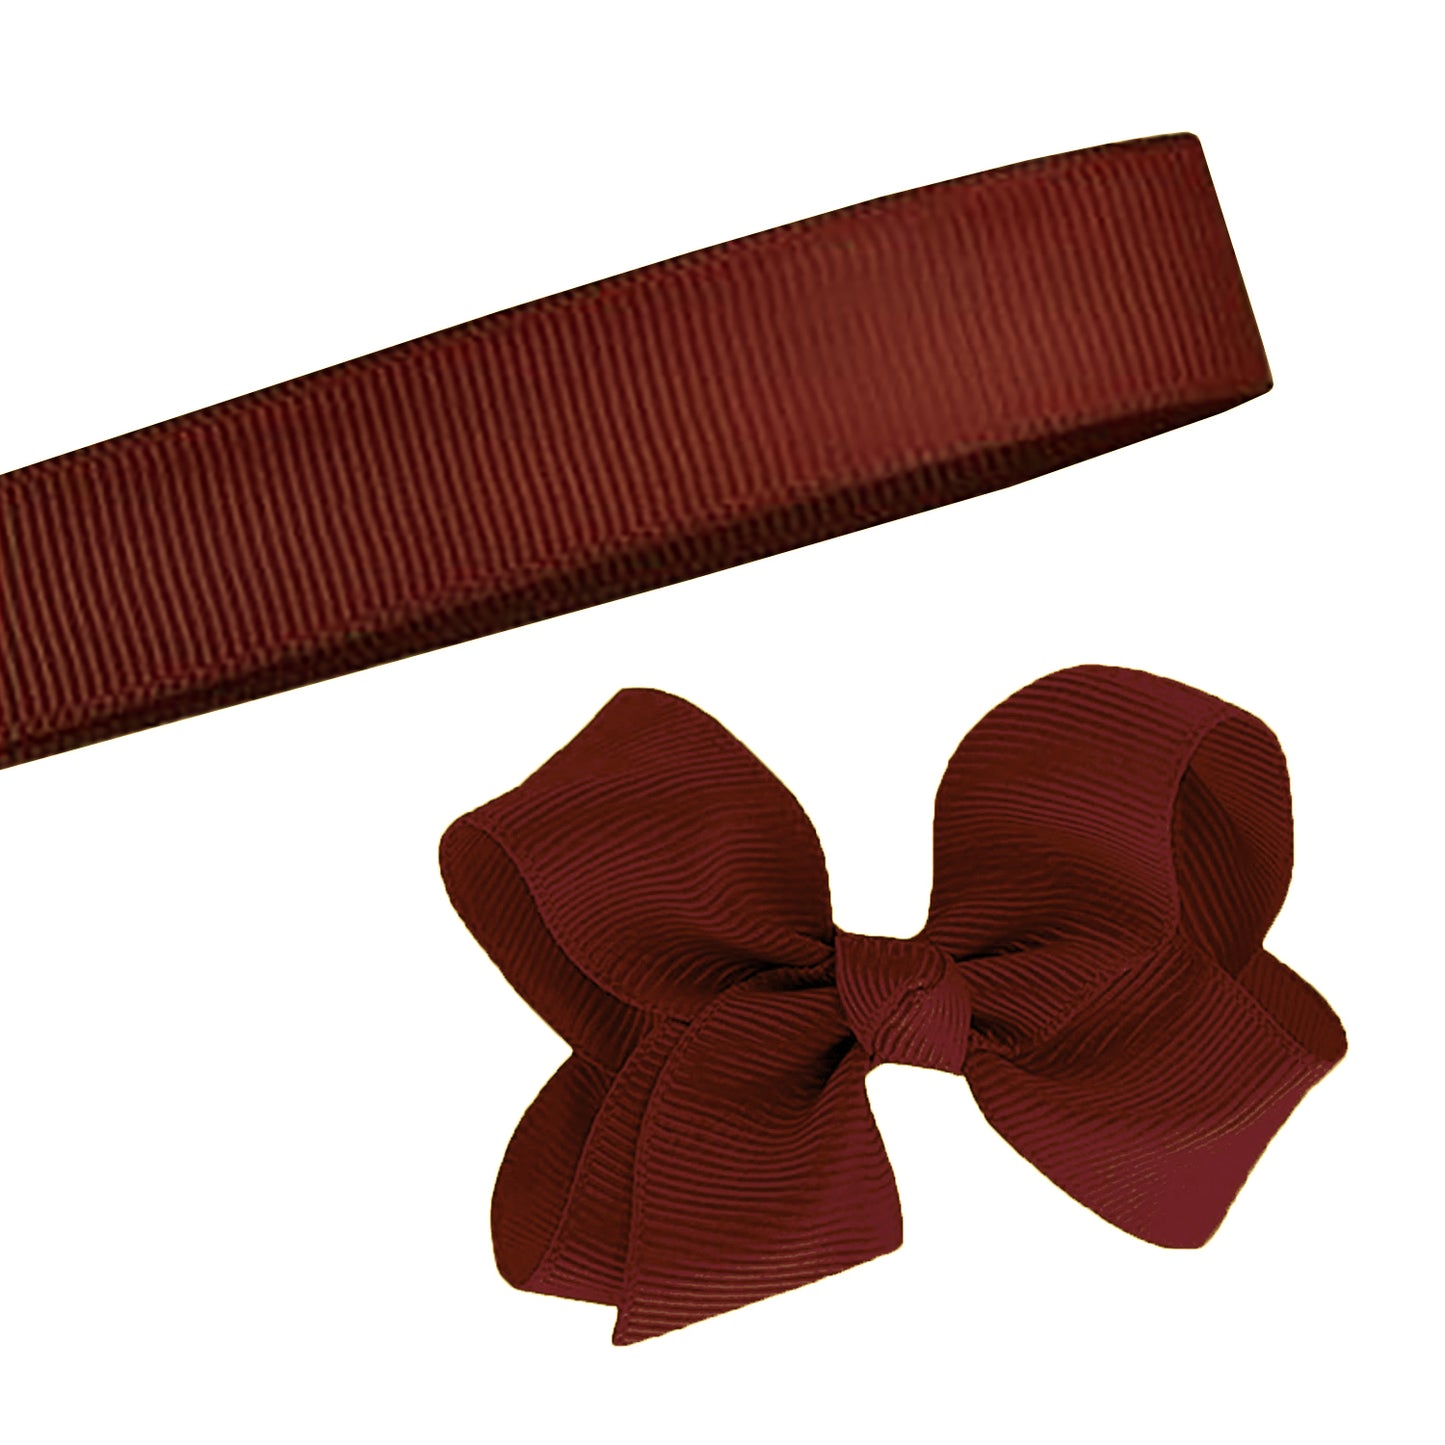 Burgundy Red Texture 3/8 Inch x 100 Yards Grosgrain Ribbon